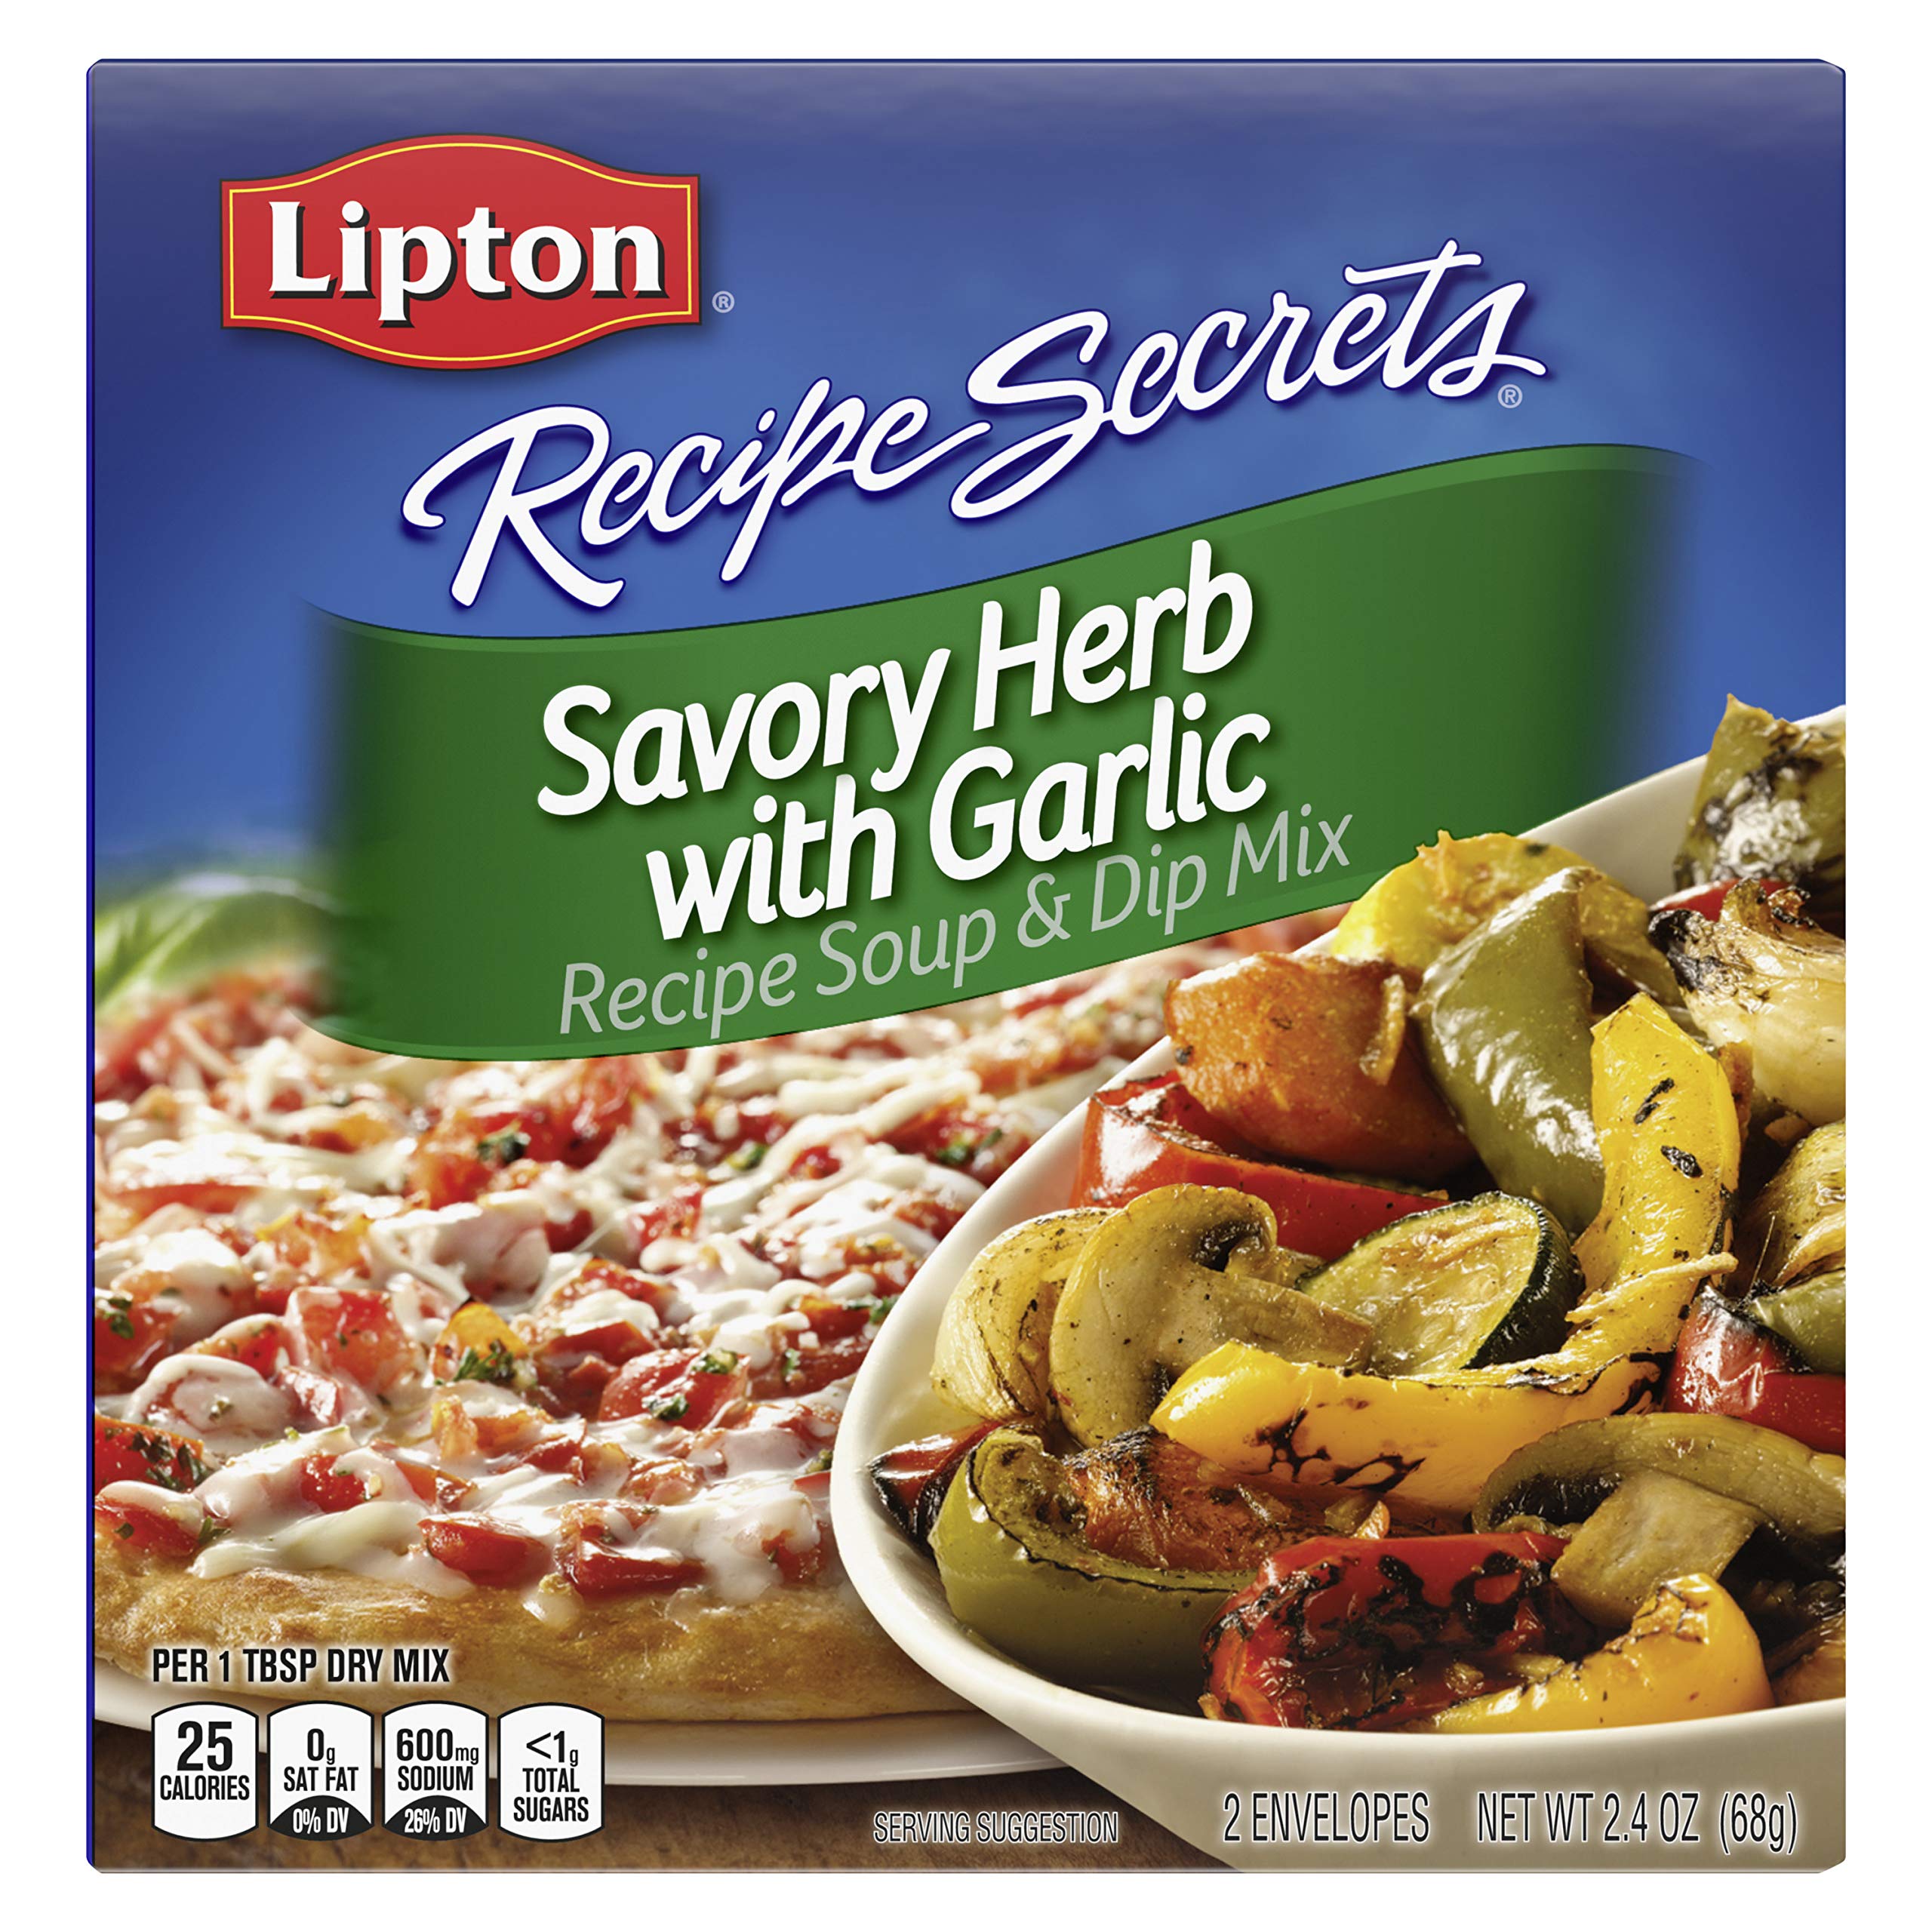  Lipton Recipe Secrets Soup and Dip Mix For a Delicious